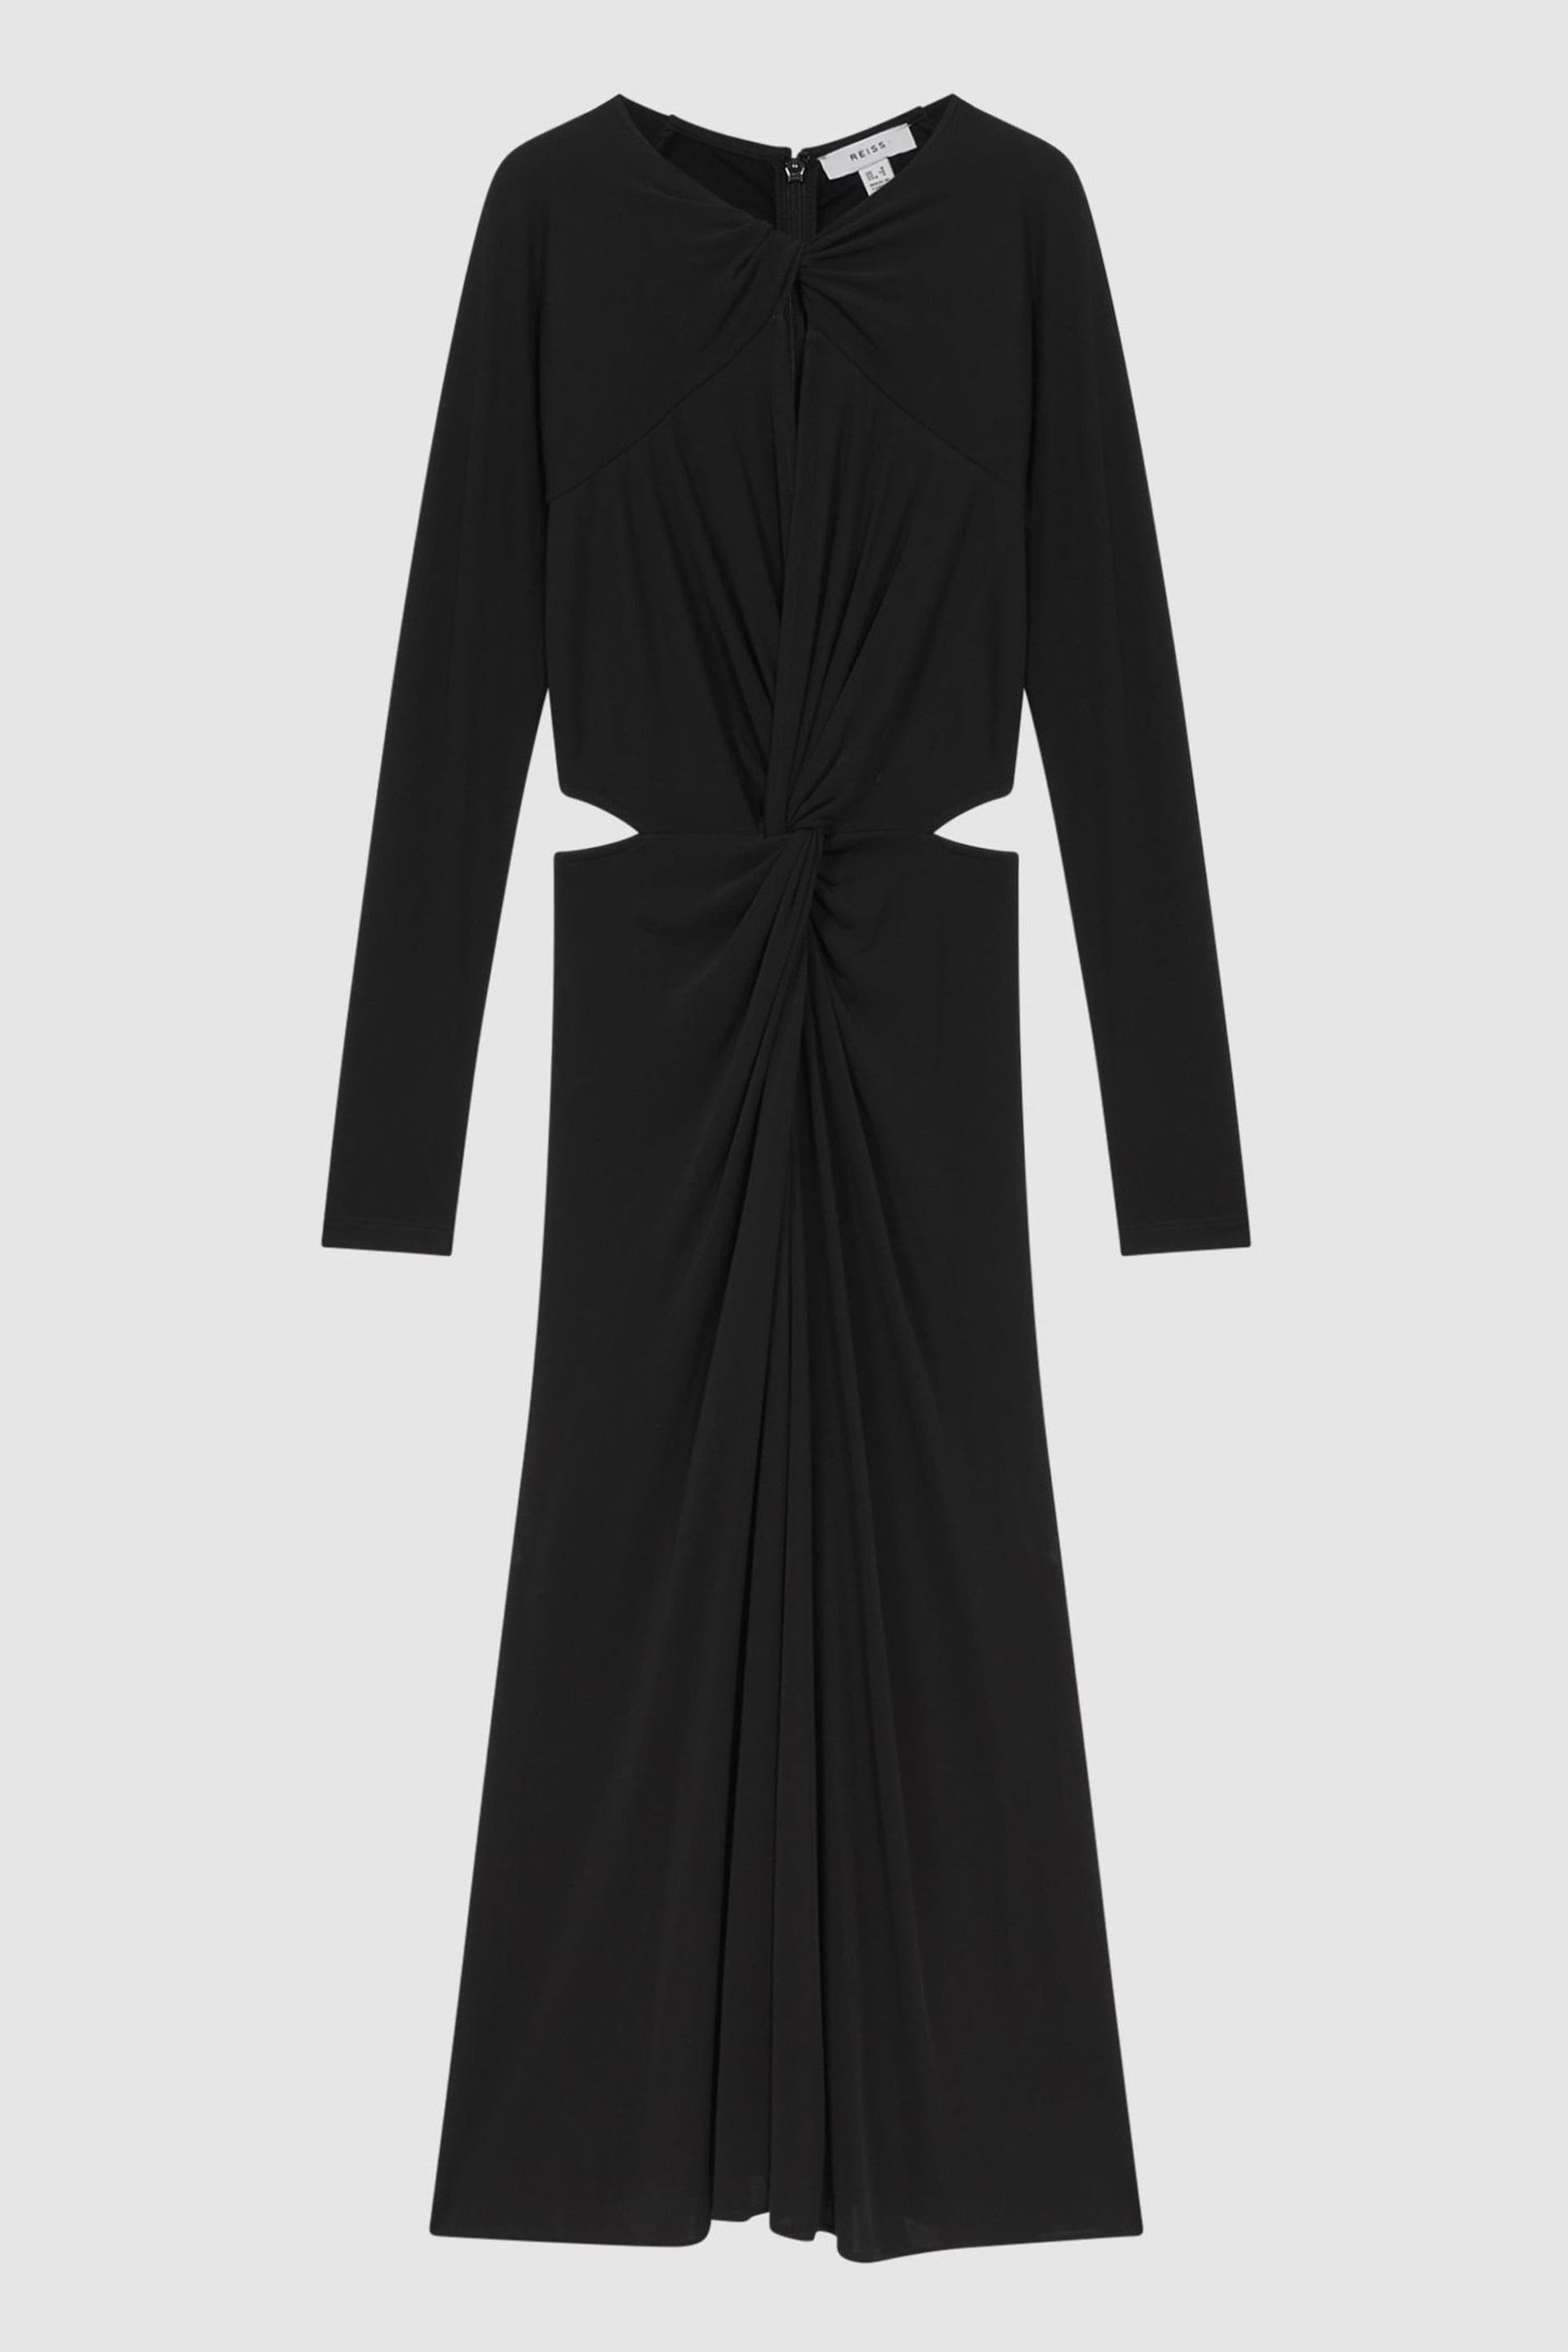 Reiss Black Faye Twist Cut-Out Midi Dress - Image 2 of 4